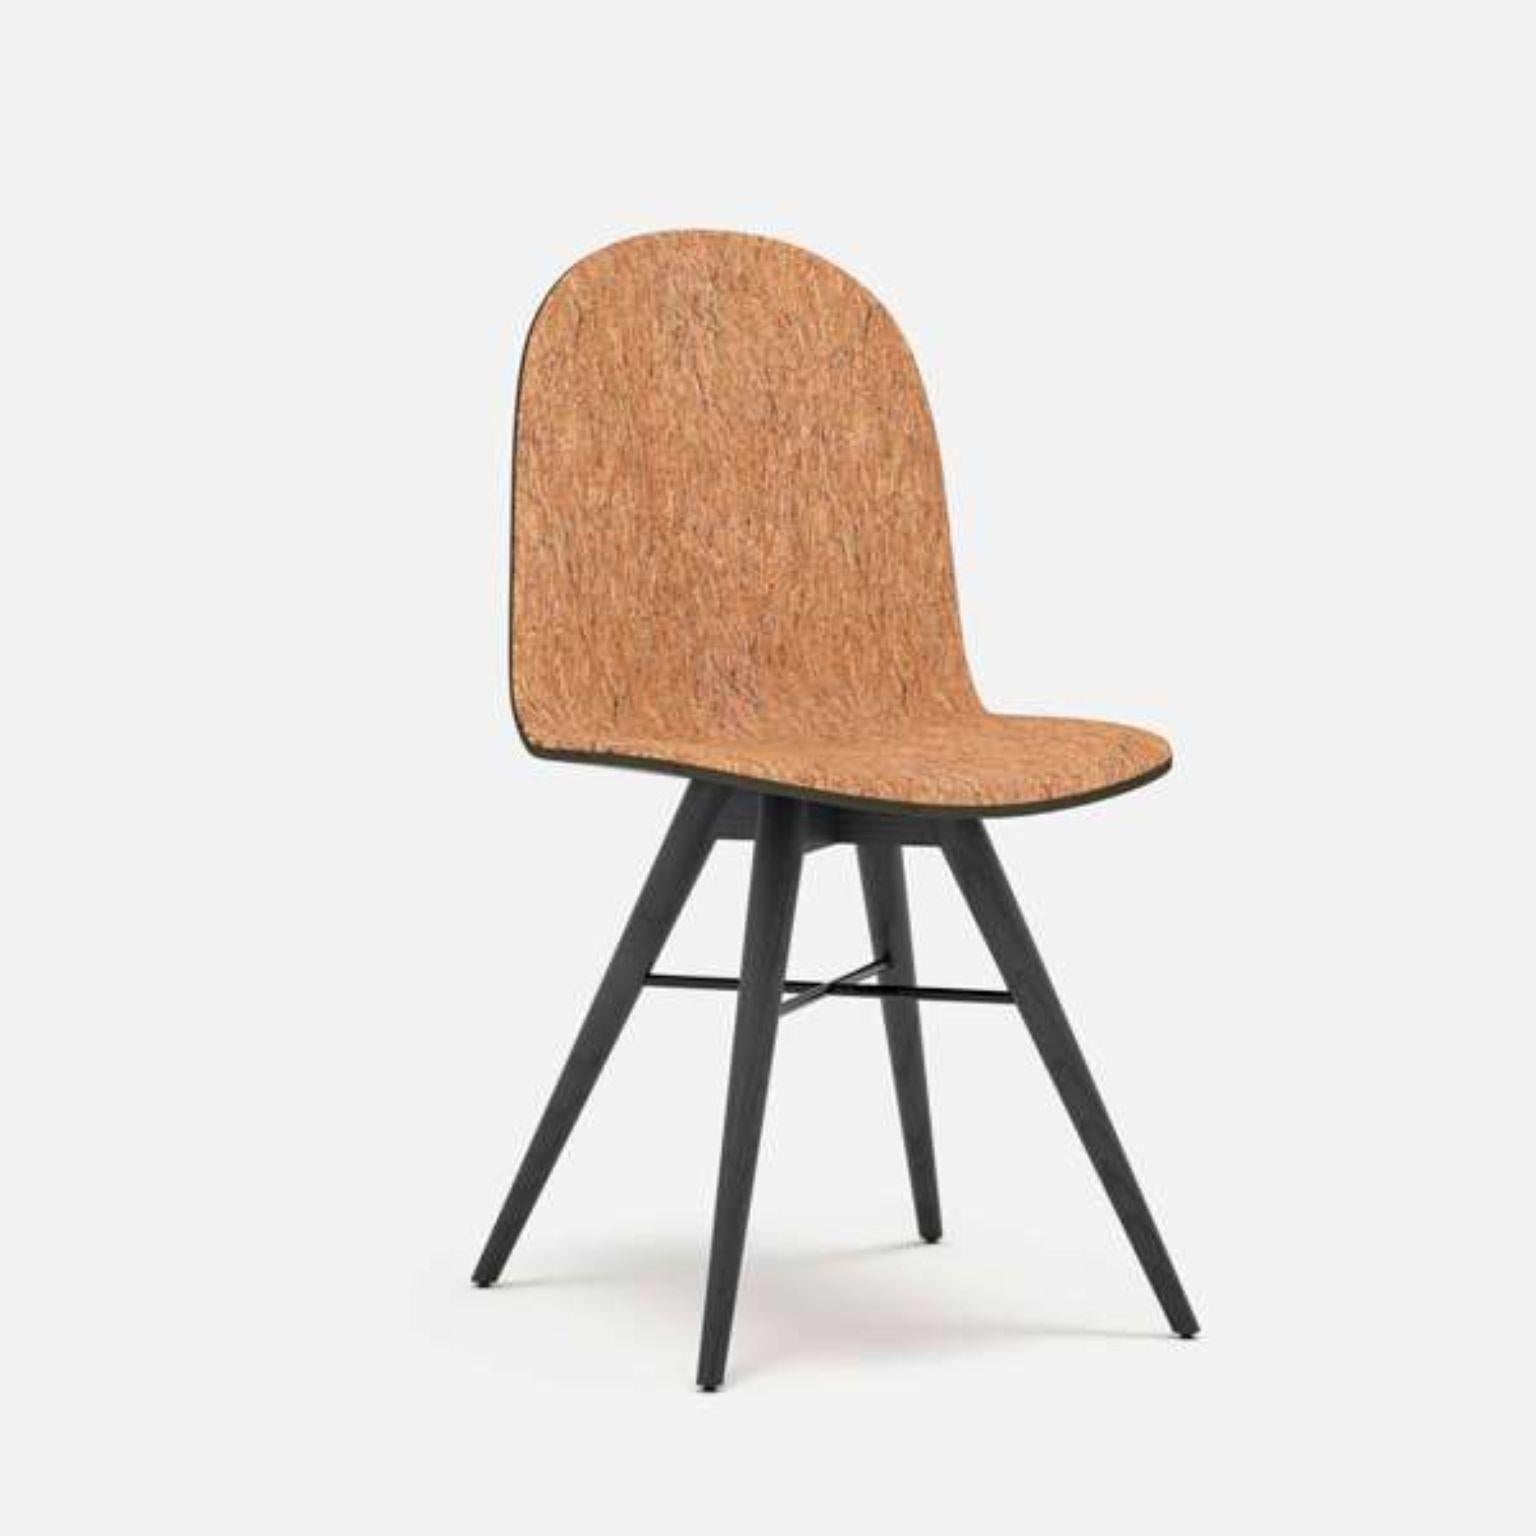 Portuguese Ash and Corkfabric Contemporary Chair by Alexandre Caldas